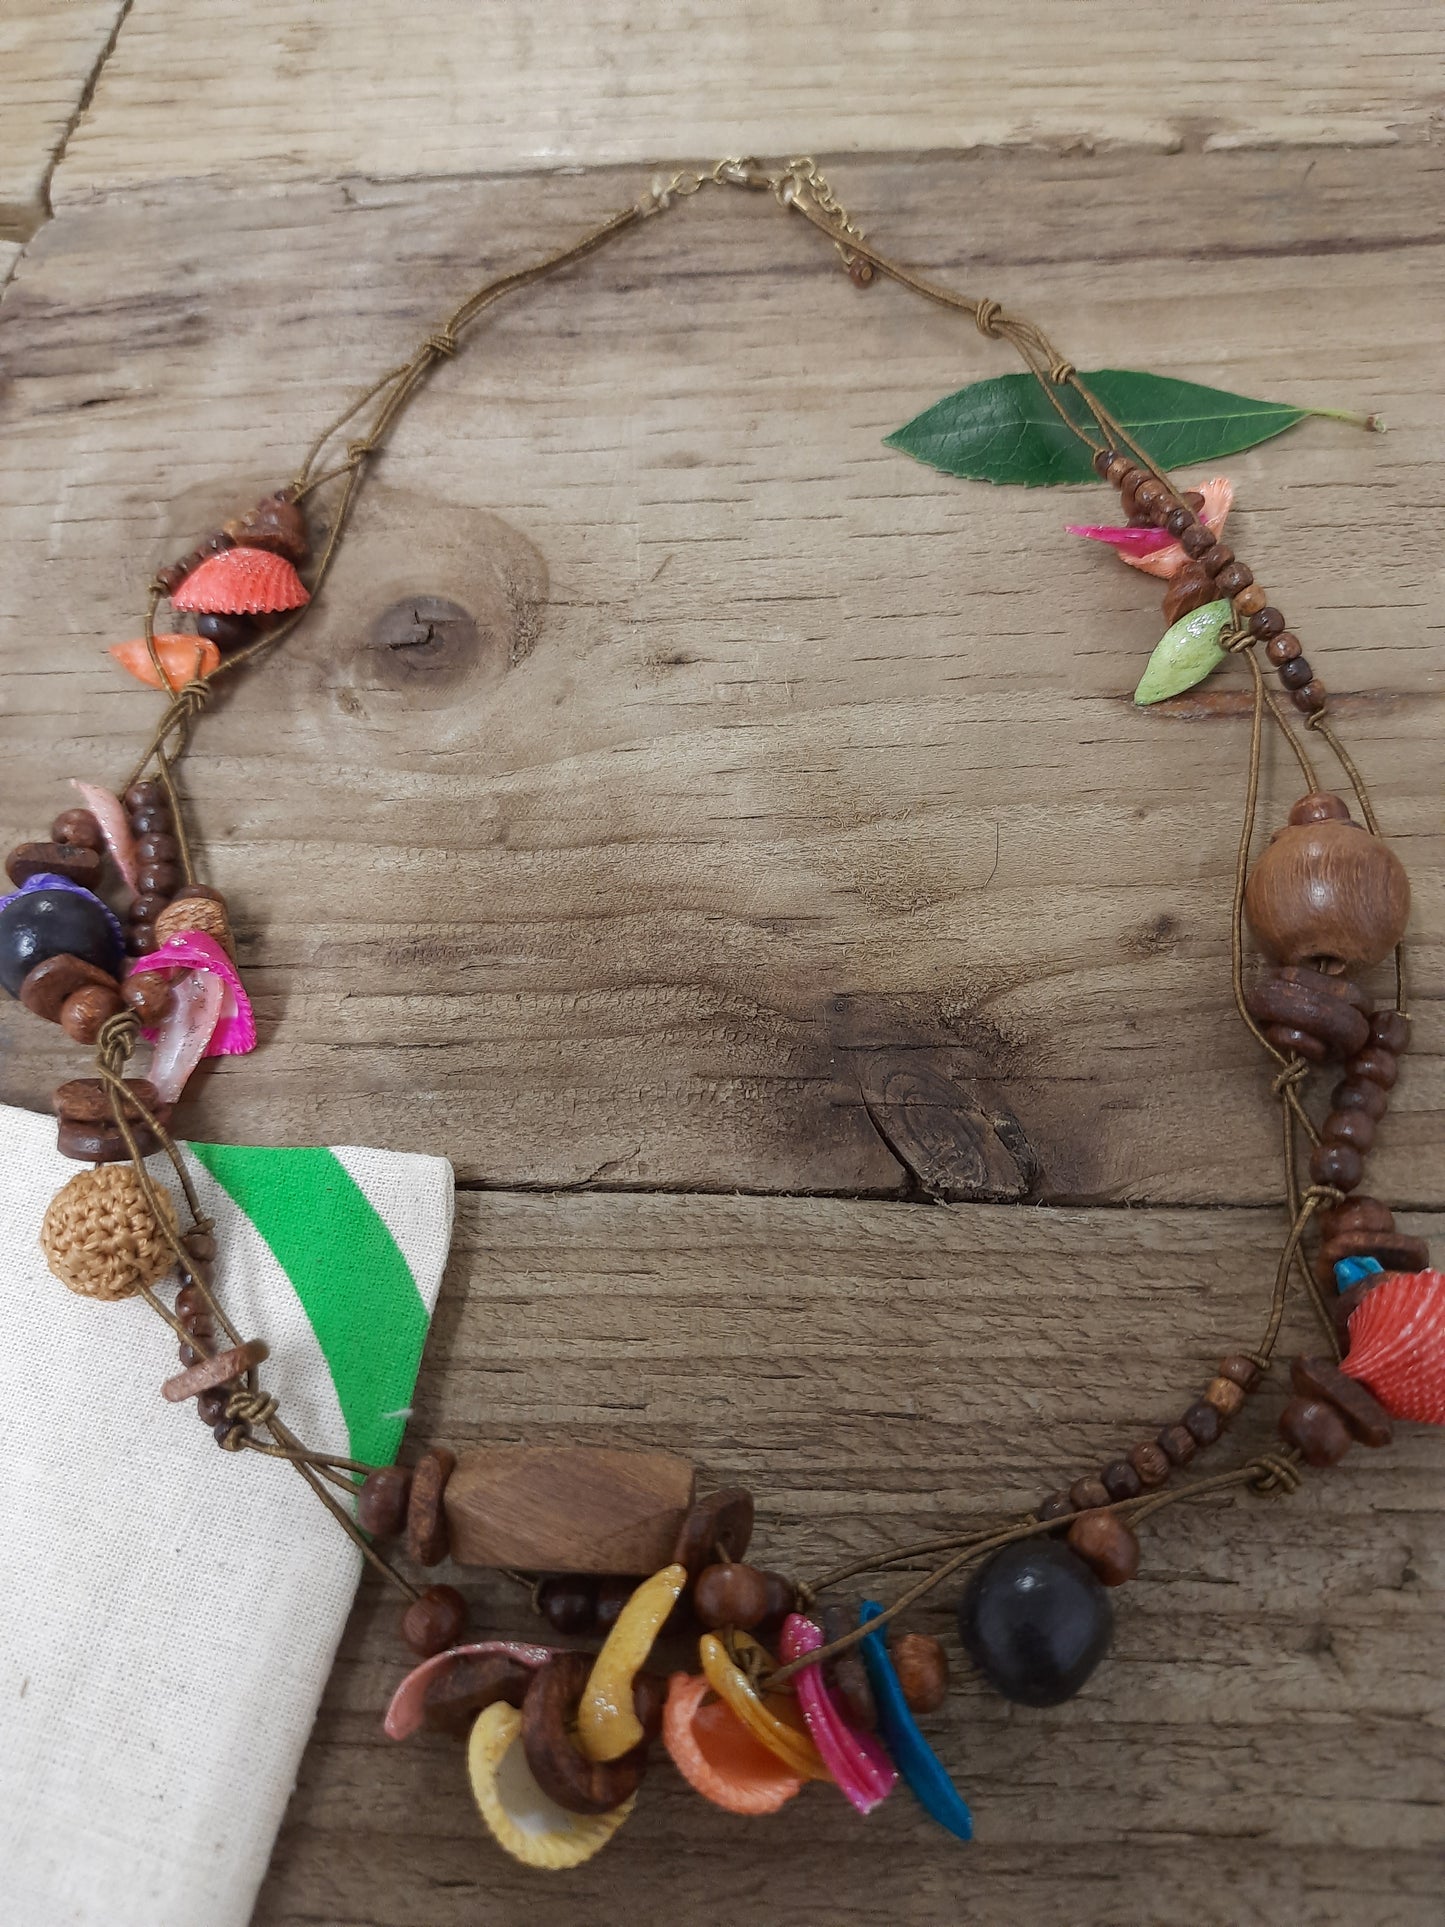 Gorgeously vibrant fair trade necklace